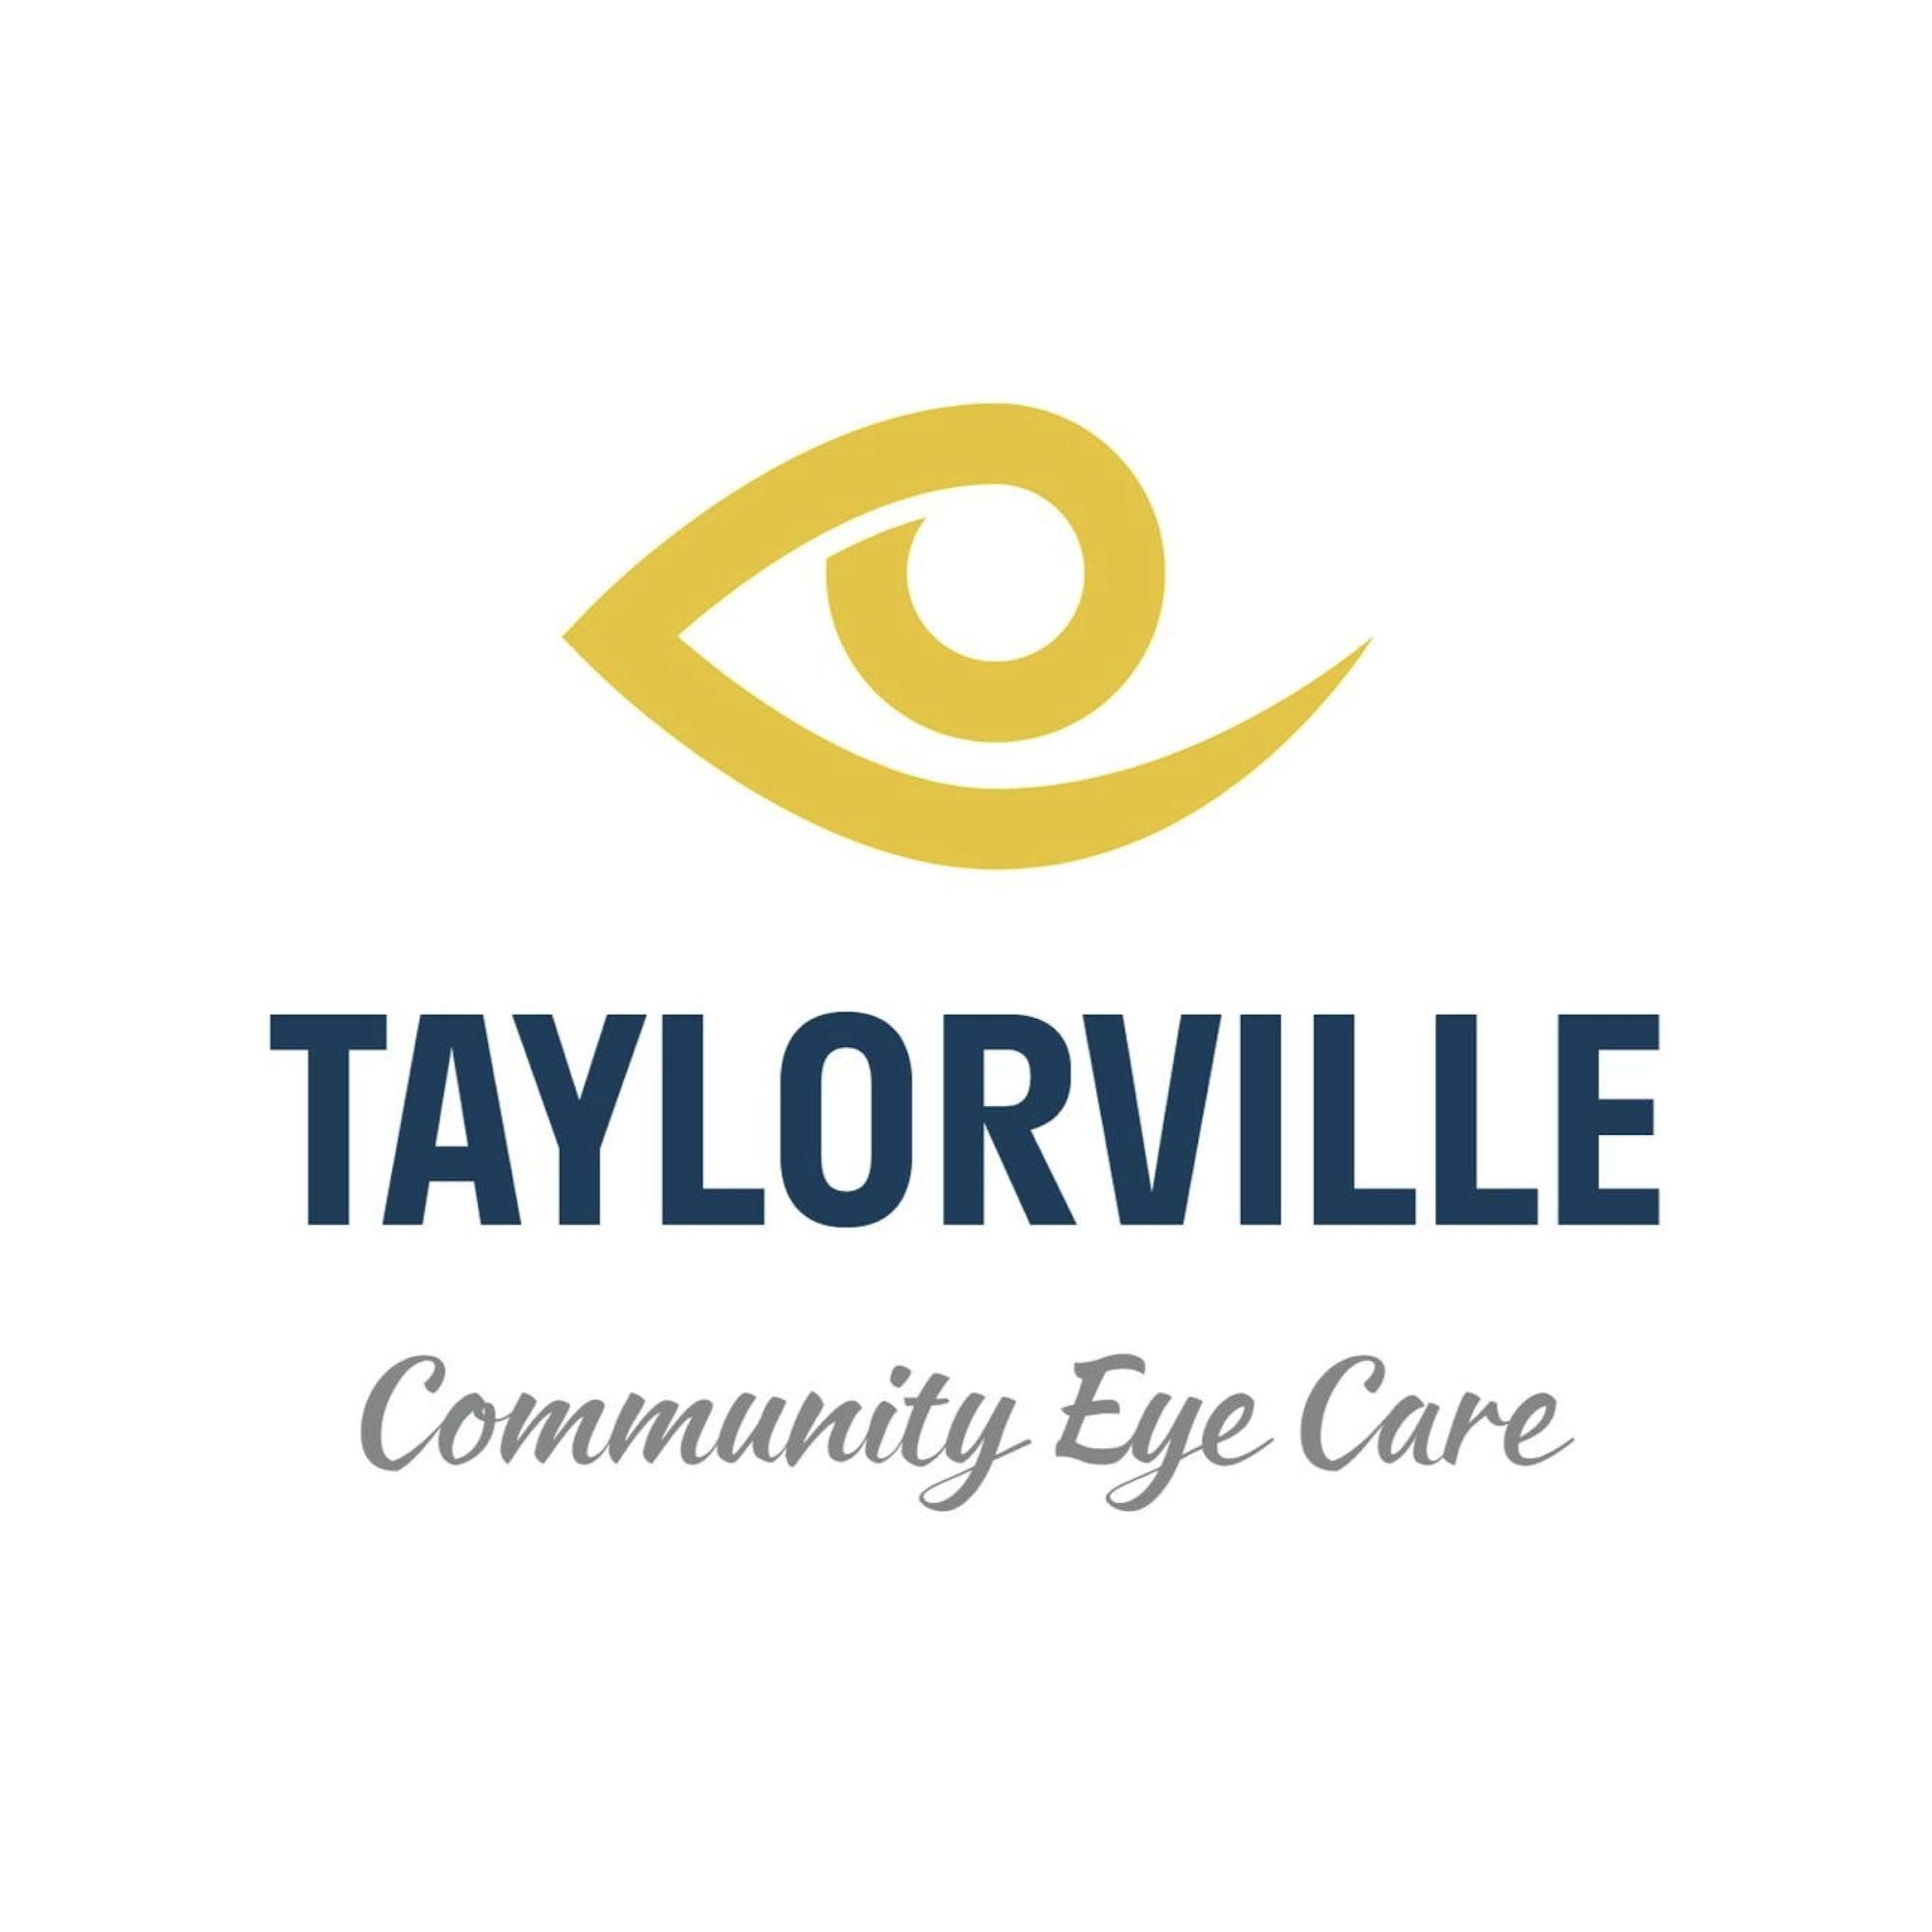 Taylorville Community Eye Care 904 W Springfield Rd, Taylorville Illinois 62568